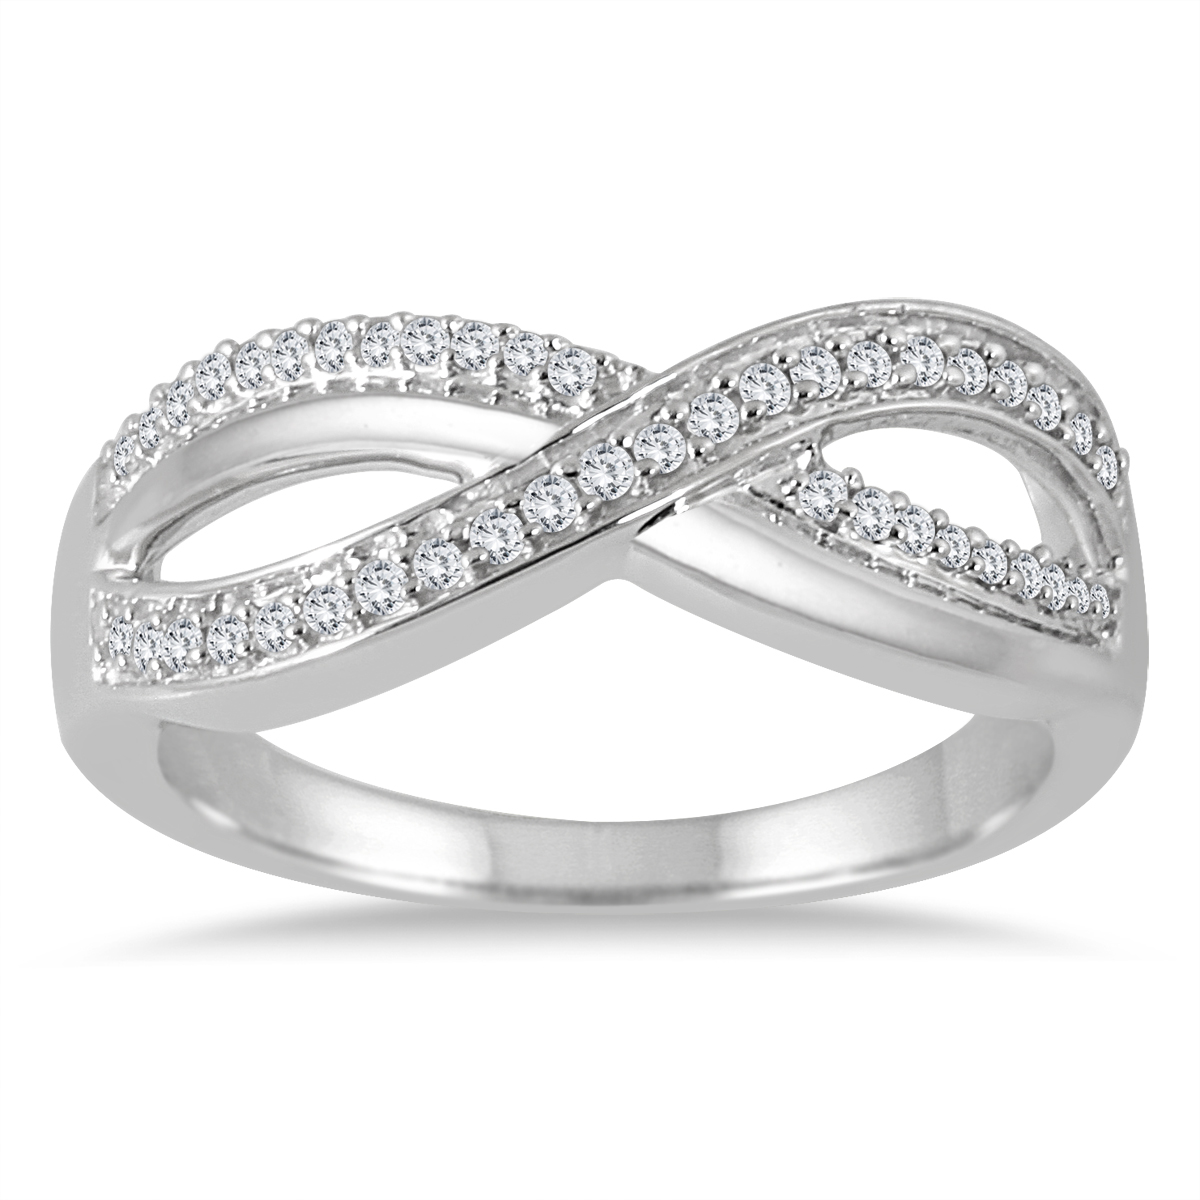 1/5 Carat TW Diamond Infinity Fashion Ring in 10K White Gold